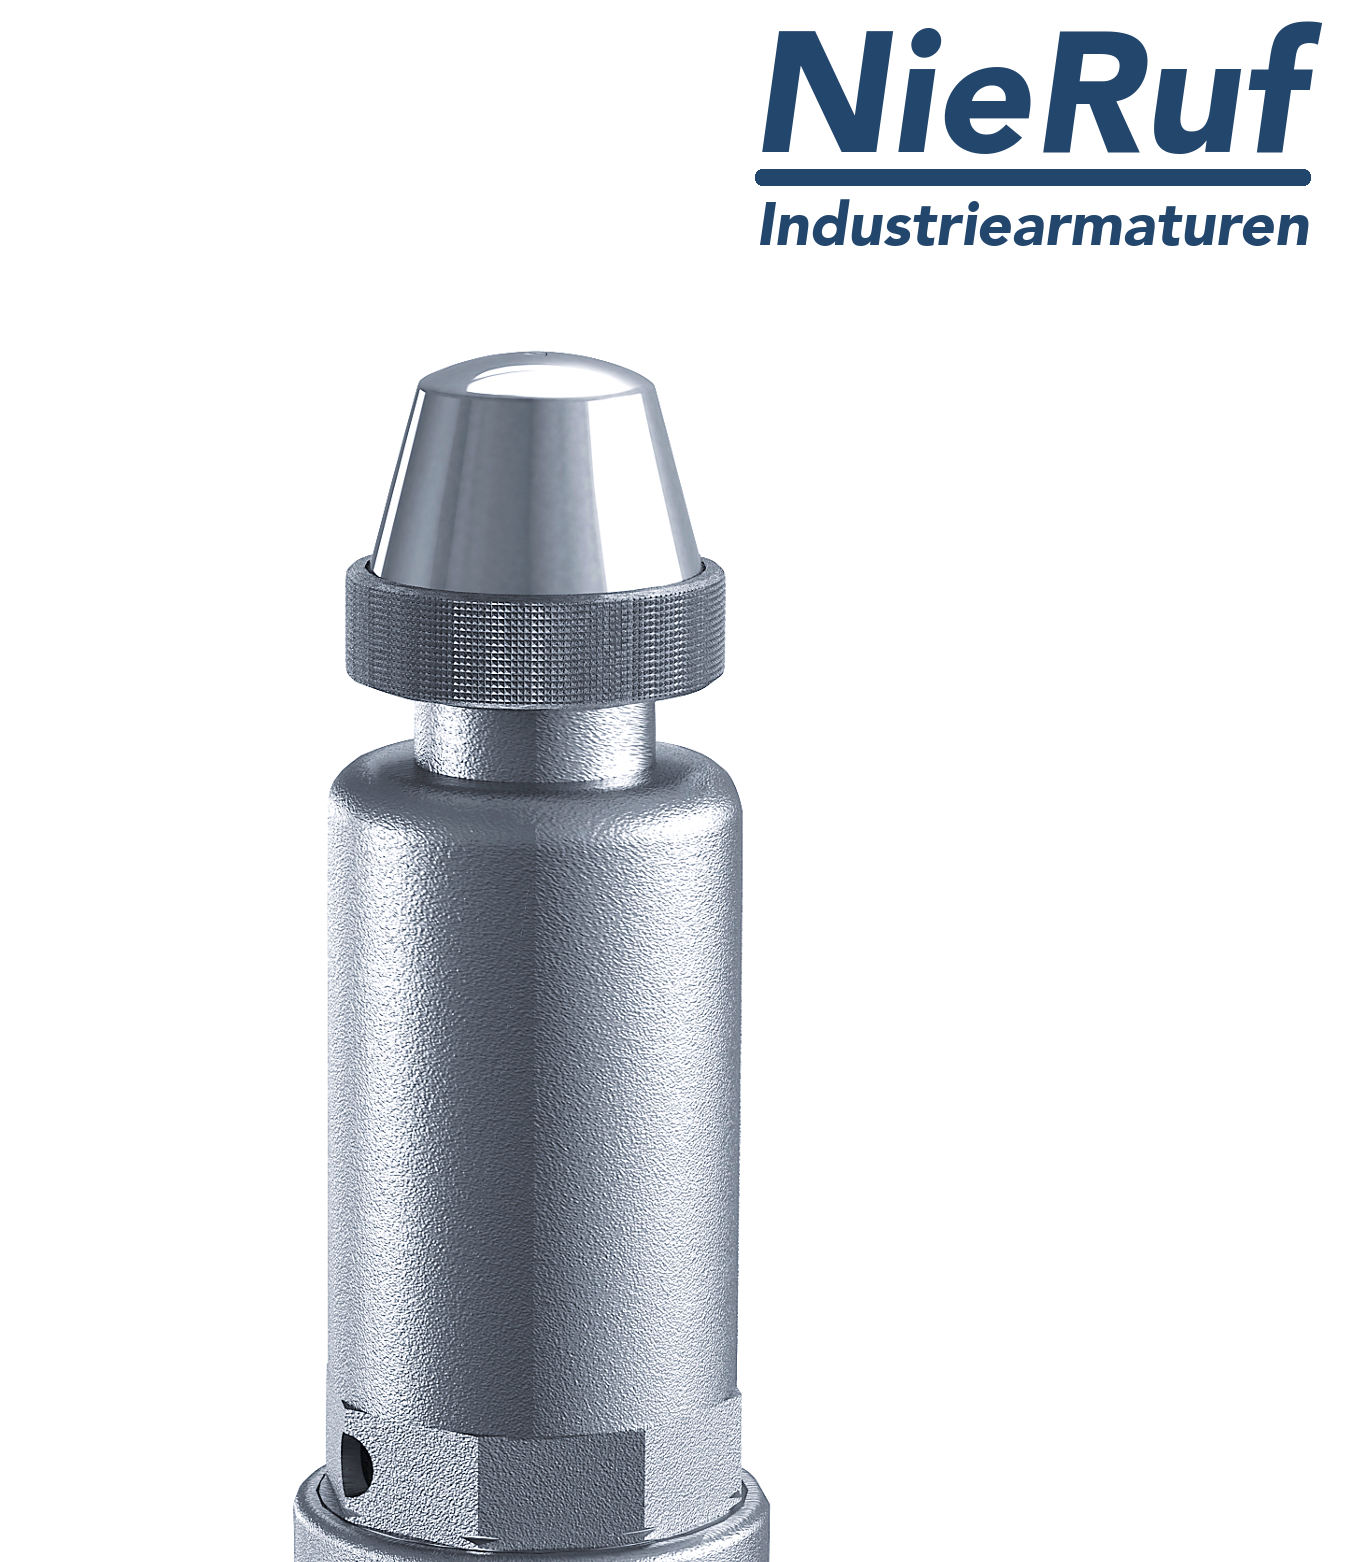 safety valve 2" x 2" fm SV10 gaseous media, stainless steel NBR